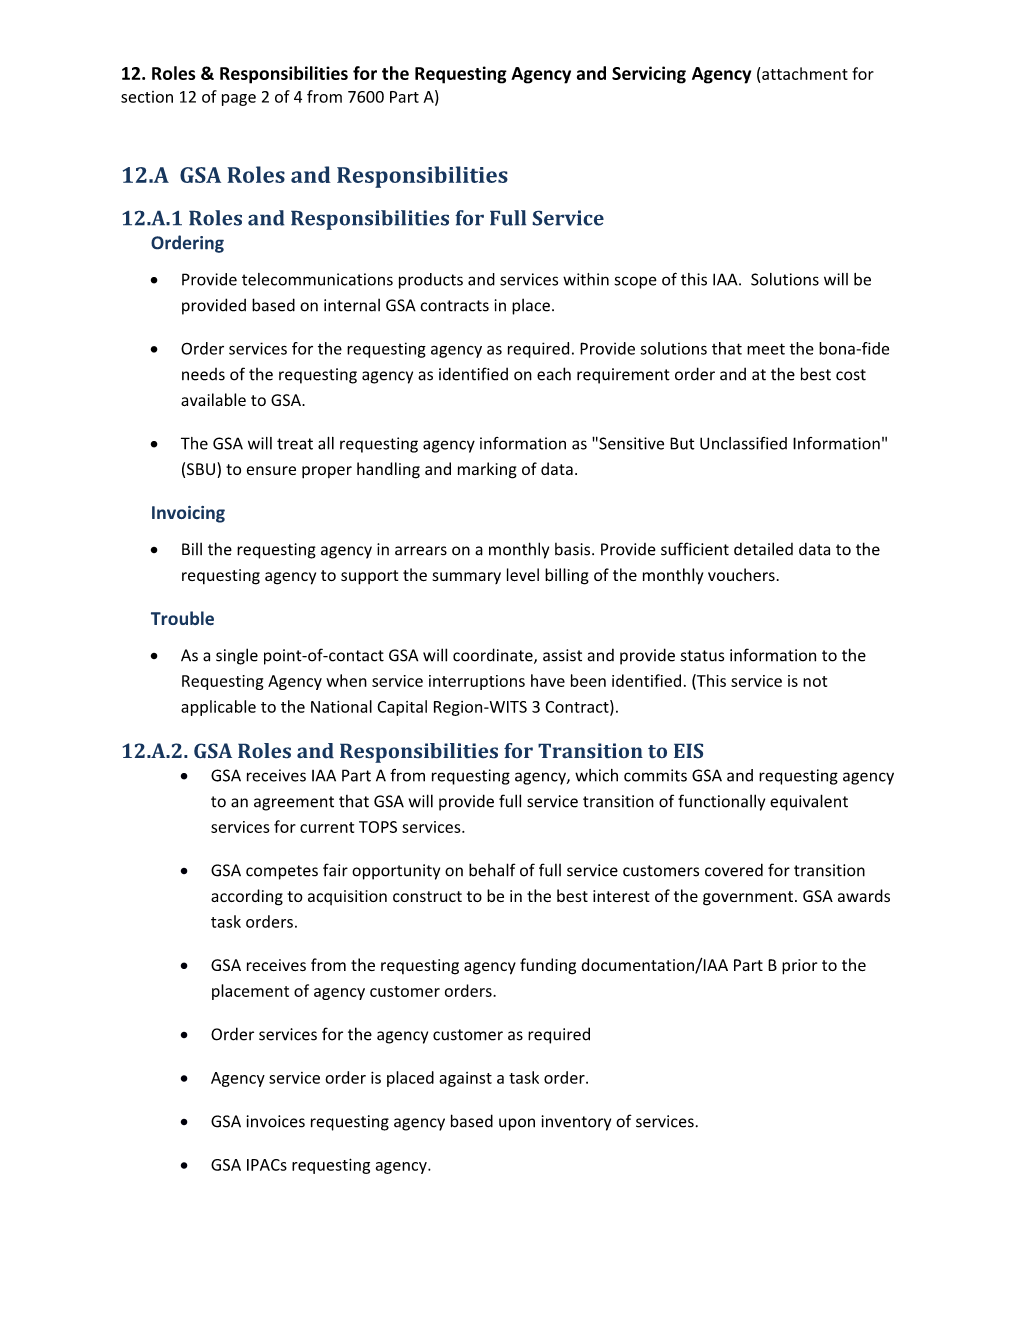 12.A GSA Roles and Responsibilities